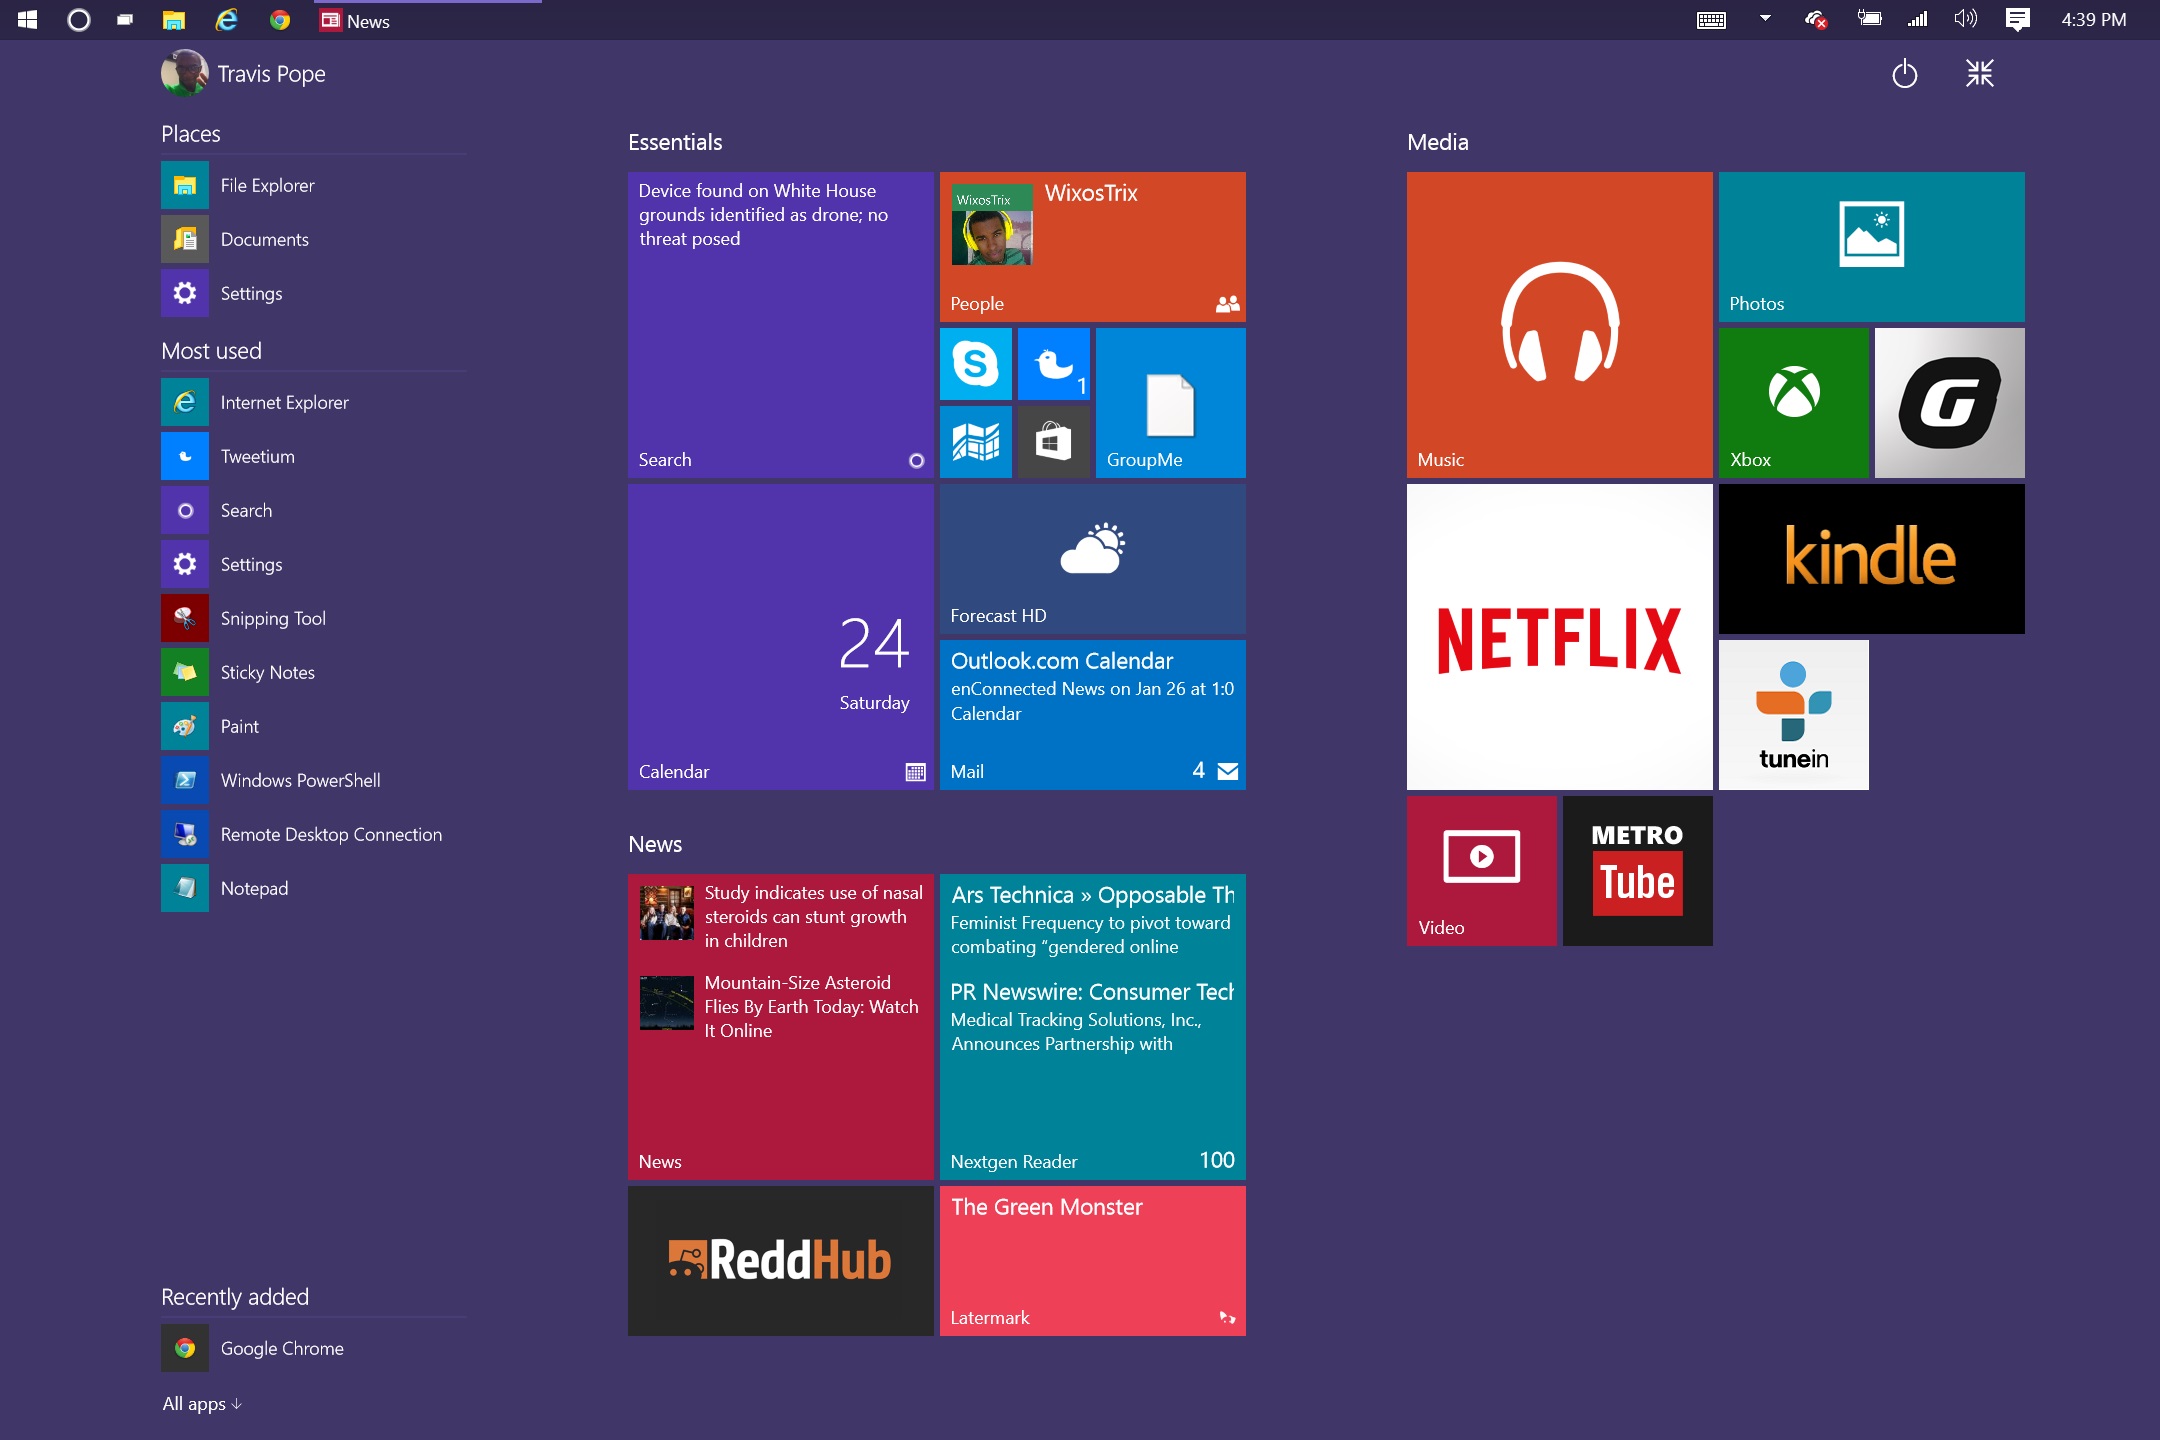 Tablet Mode looks a lot like Windows 8, FYI.